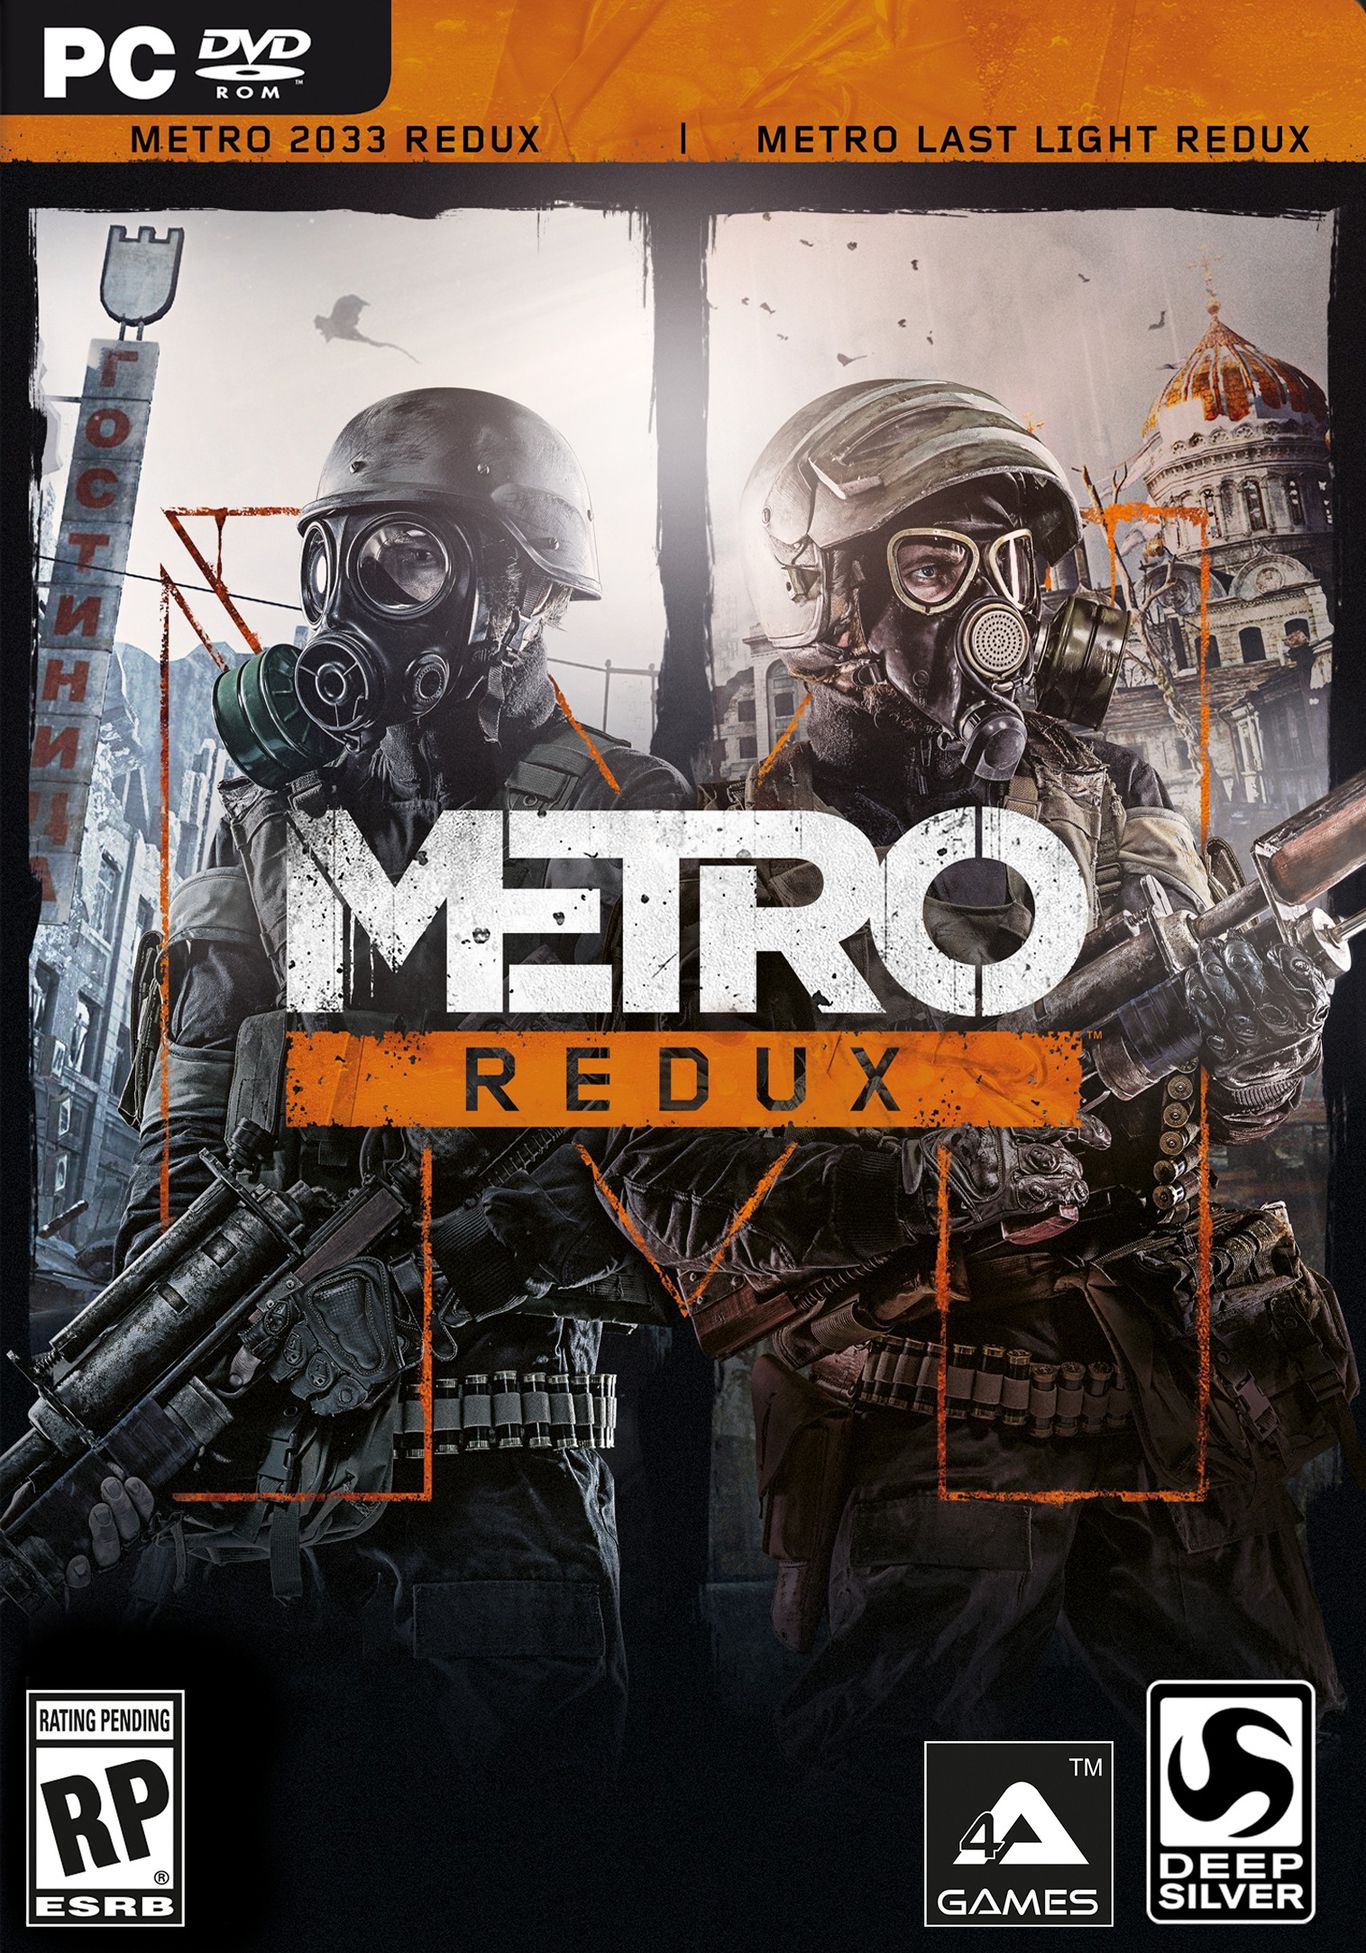 Metro Redux Duology - R.G Mechanics (2014)